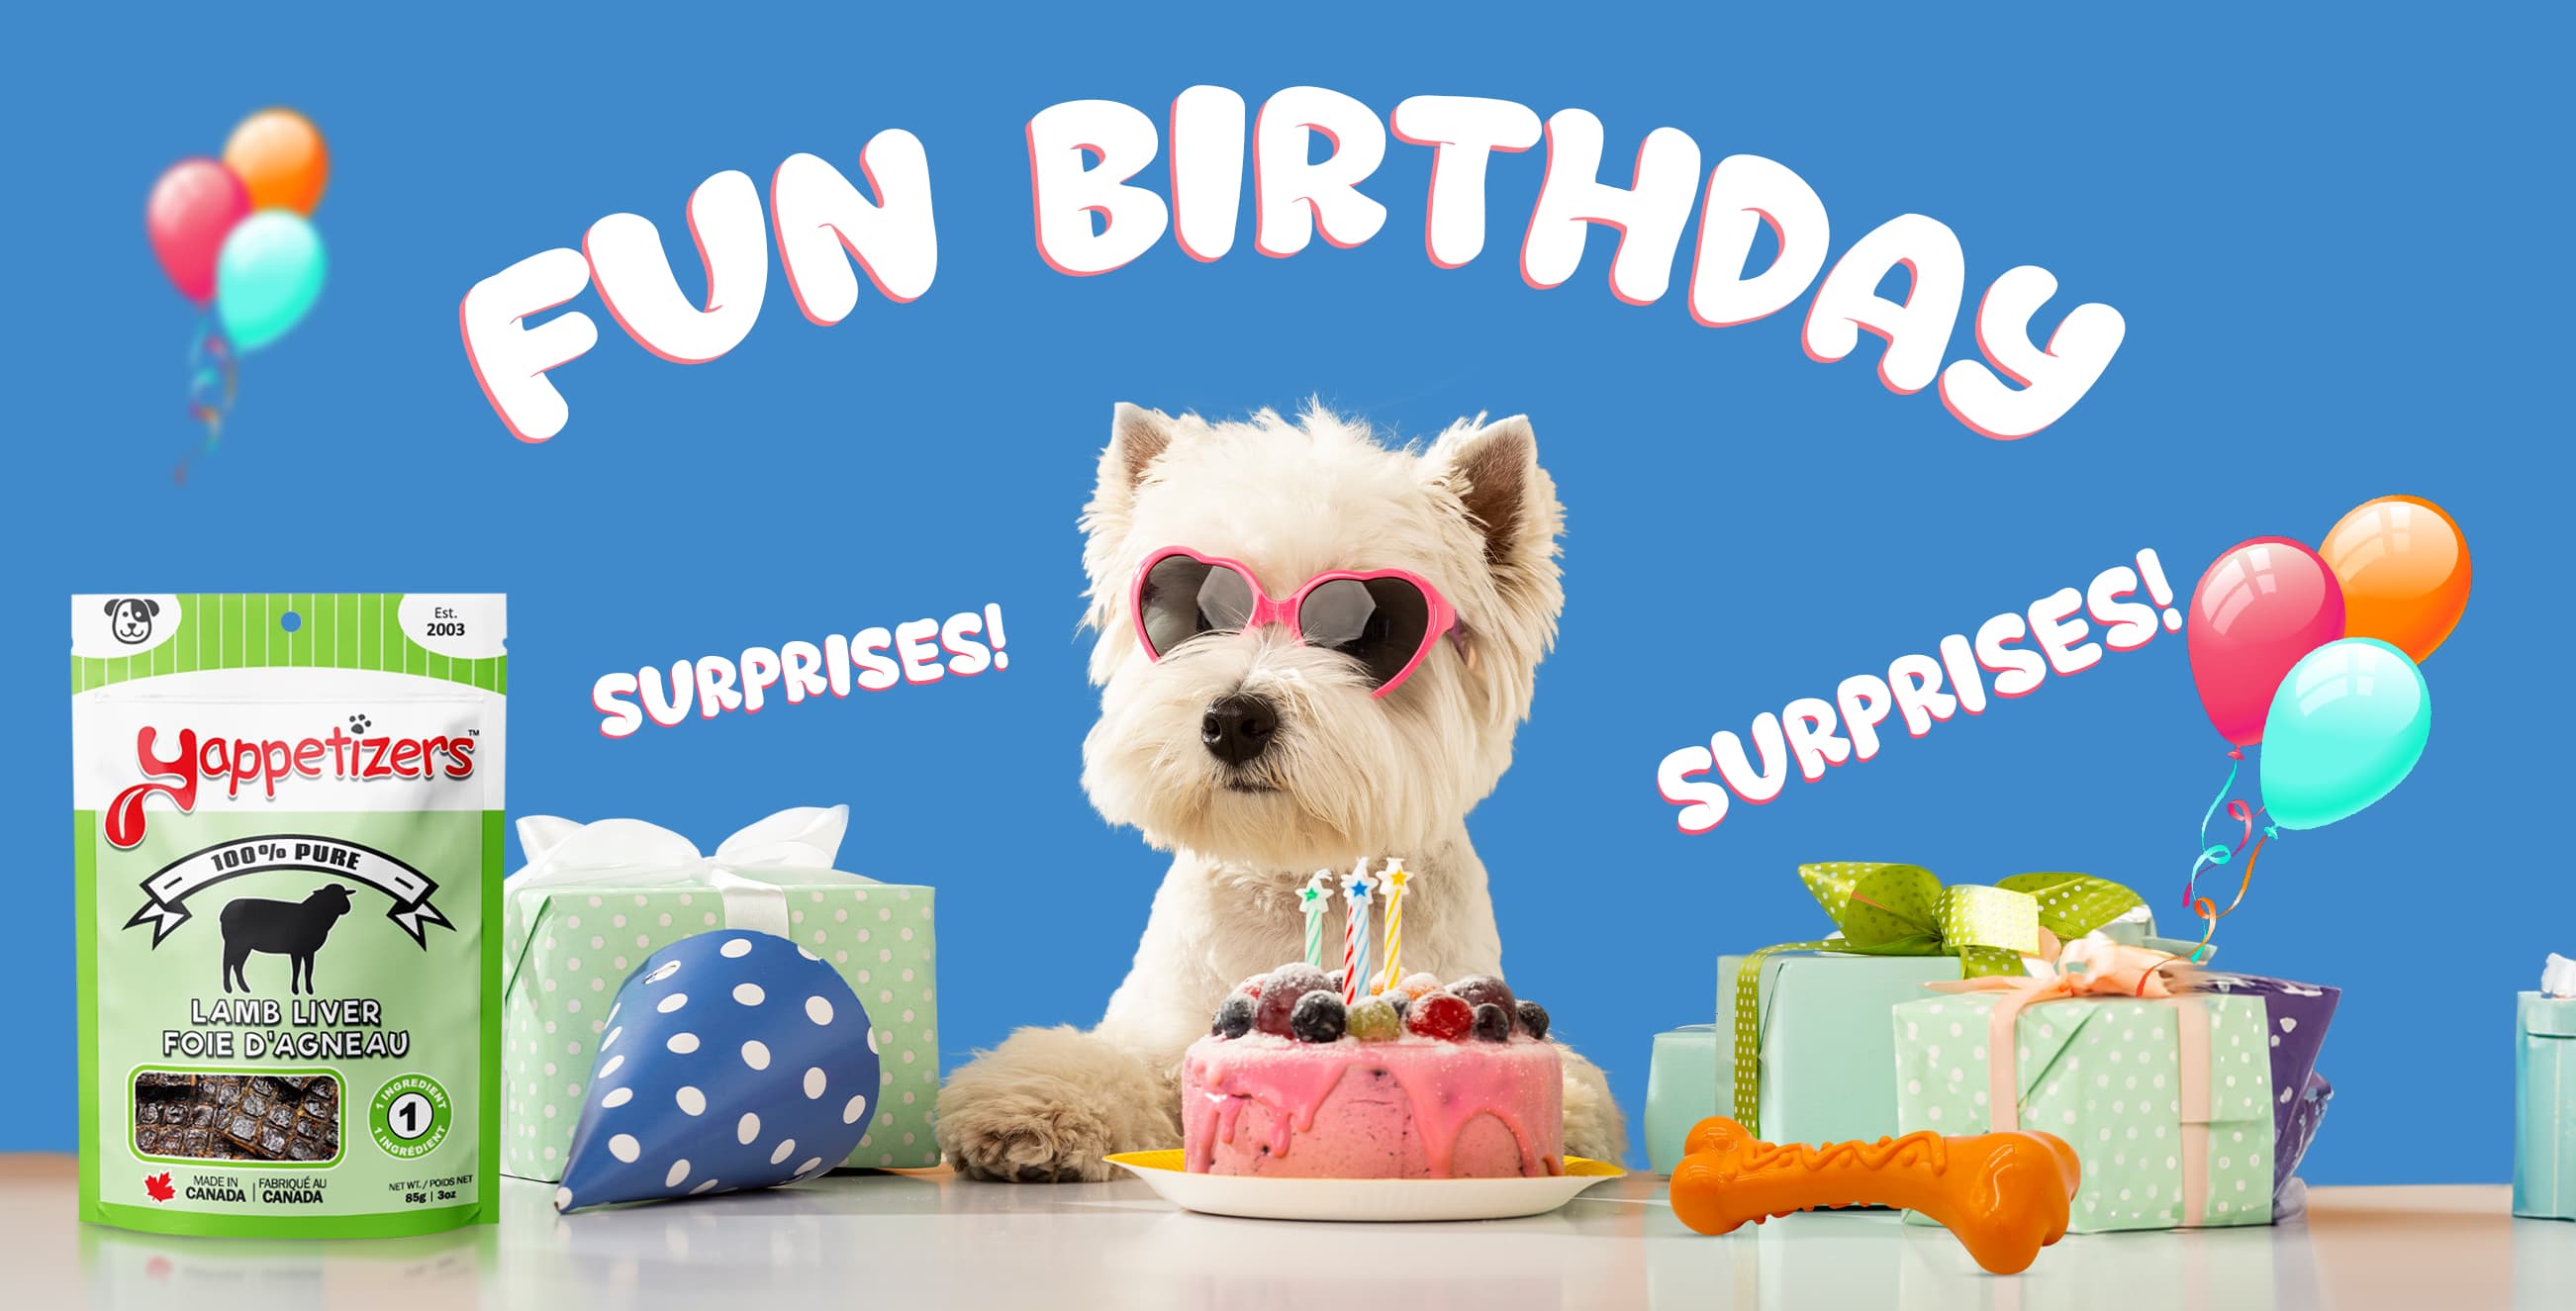 DuraPaw Dog Birthday Gift Box Fun Toy and Treat Surprises